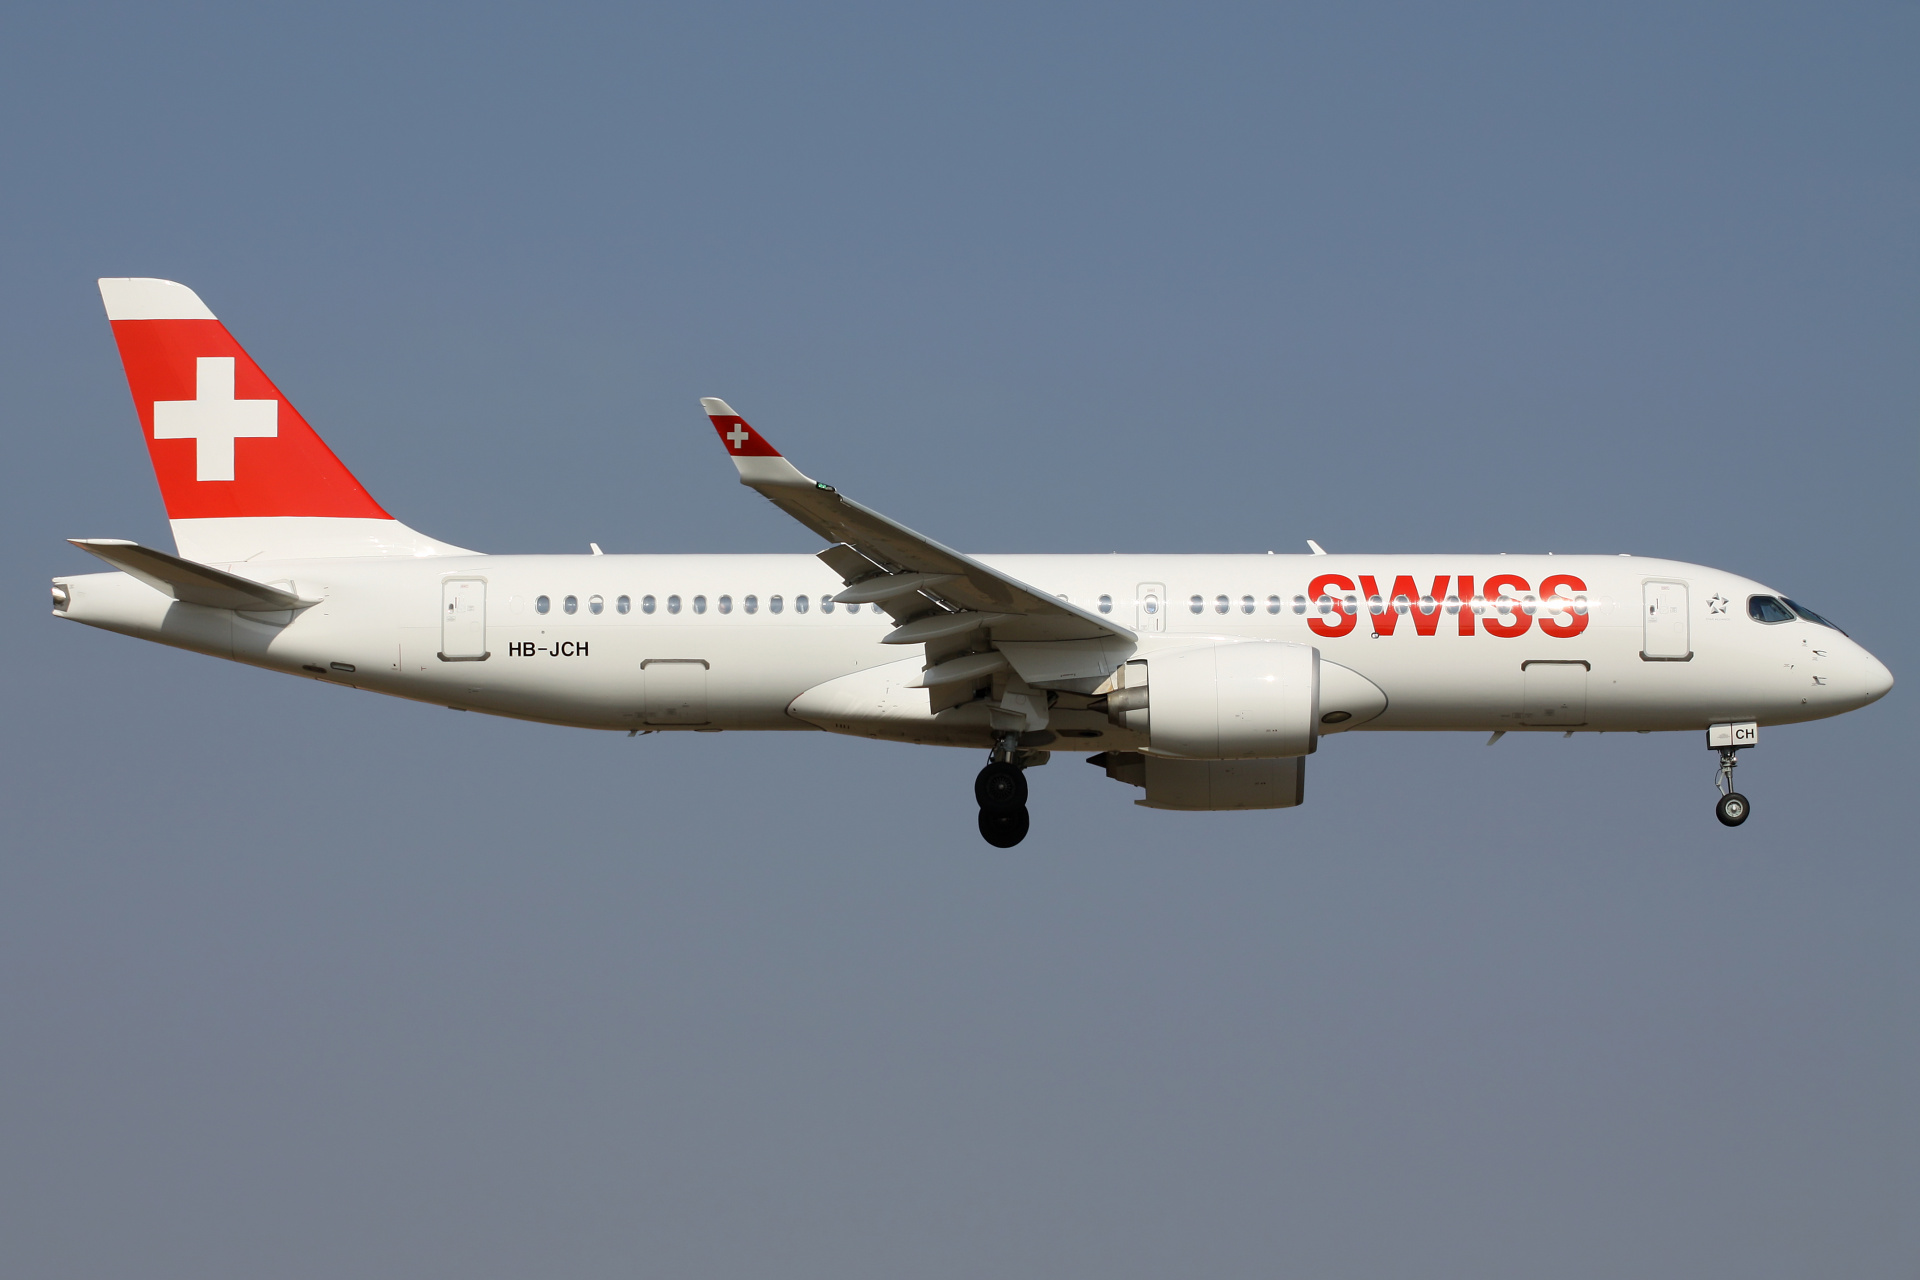 HB-JCH (Aircraft » EPWA Spotting » Airbus A220-300 » Swiss International Air Lines)